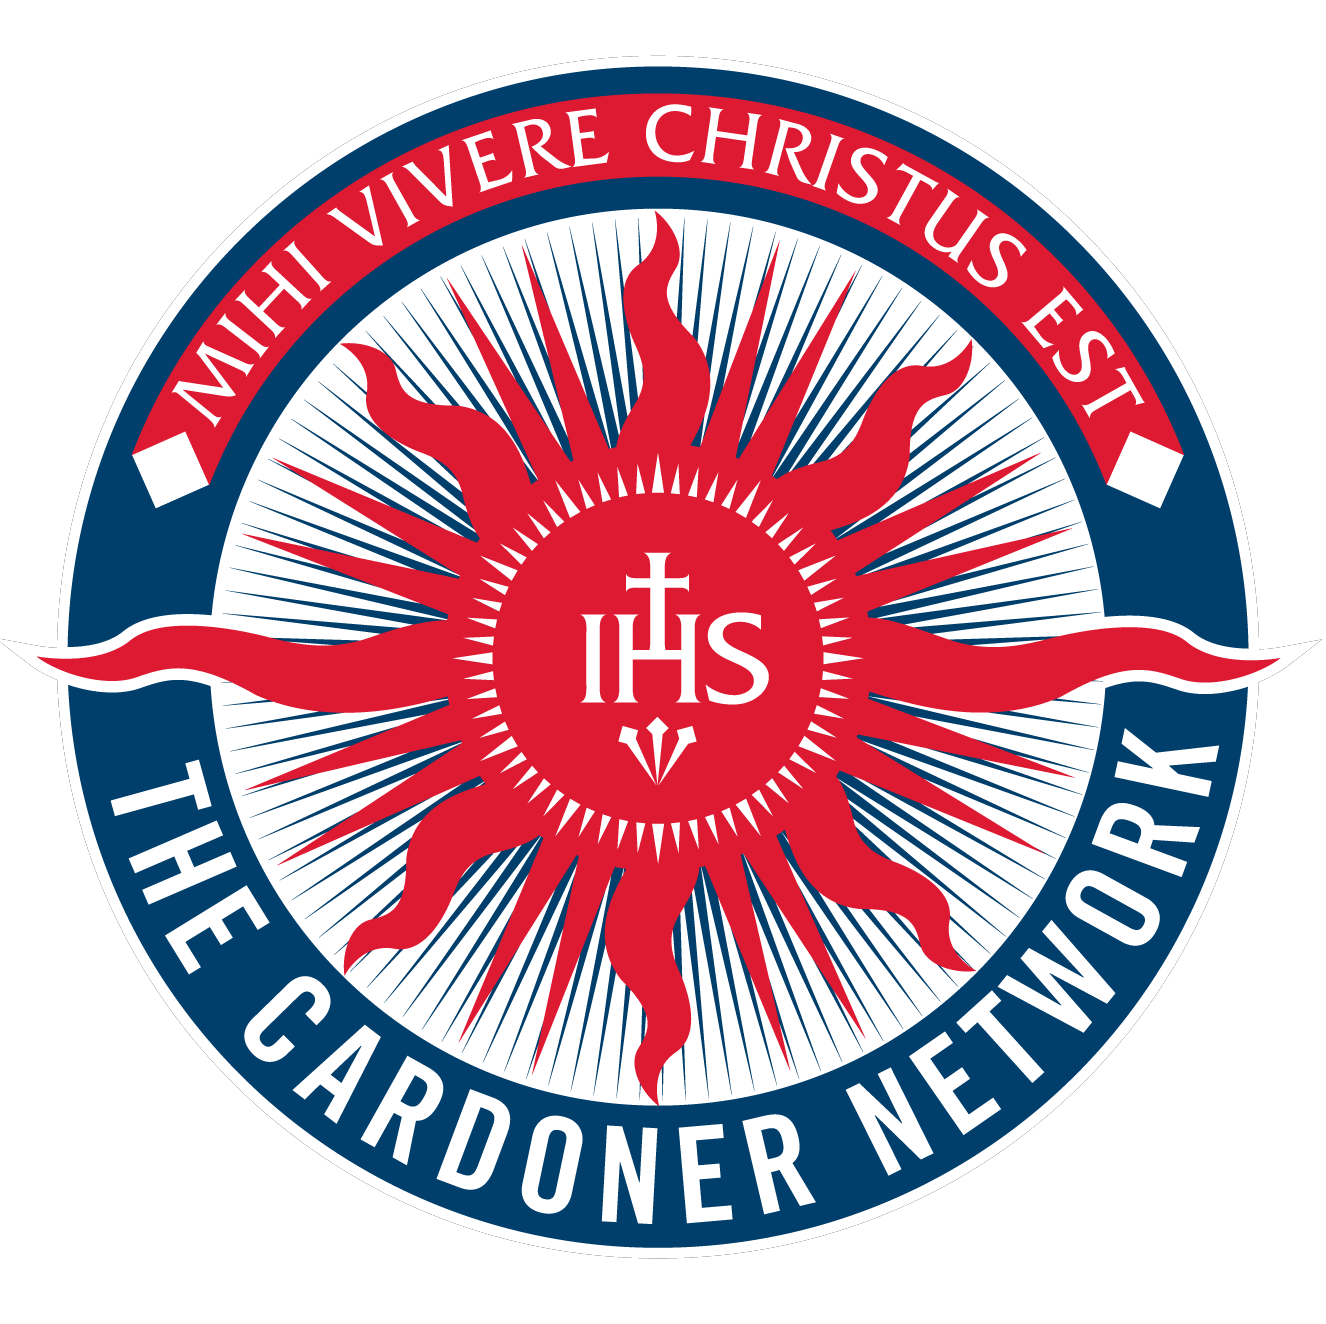 Tight Logo_The-Cardoner-Network